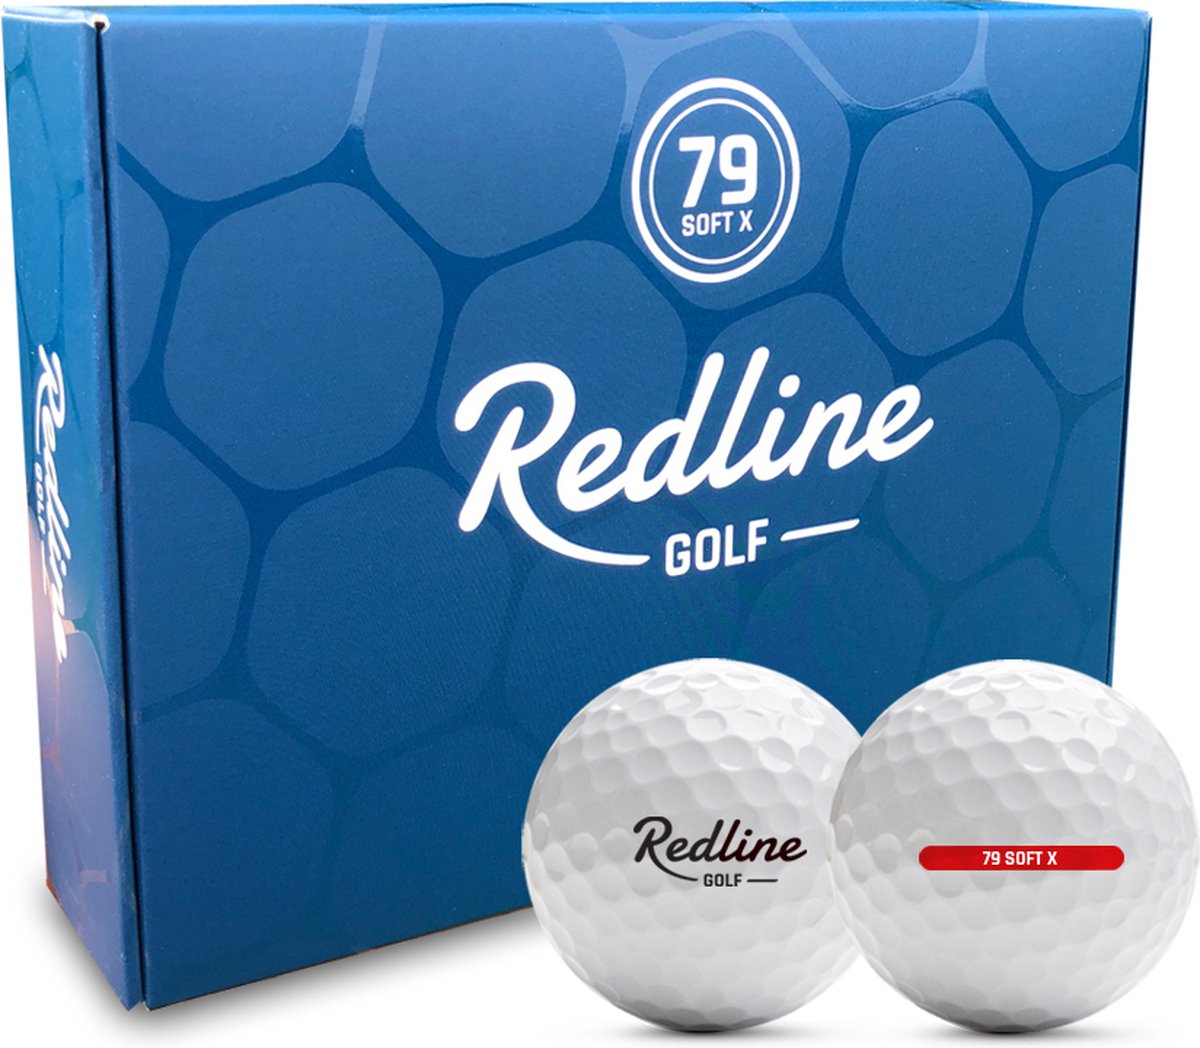 Redline 79 Soft X 1 dozijn